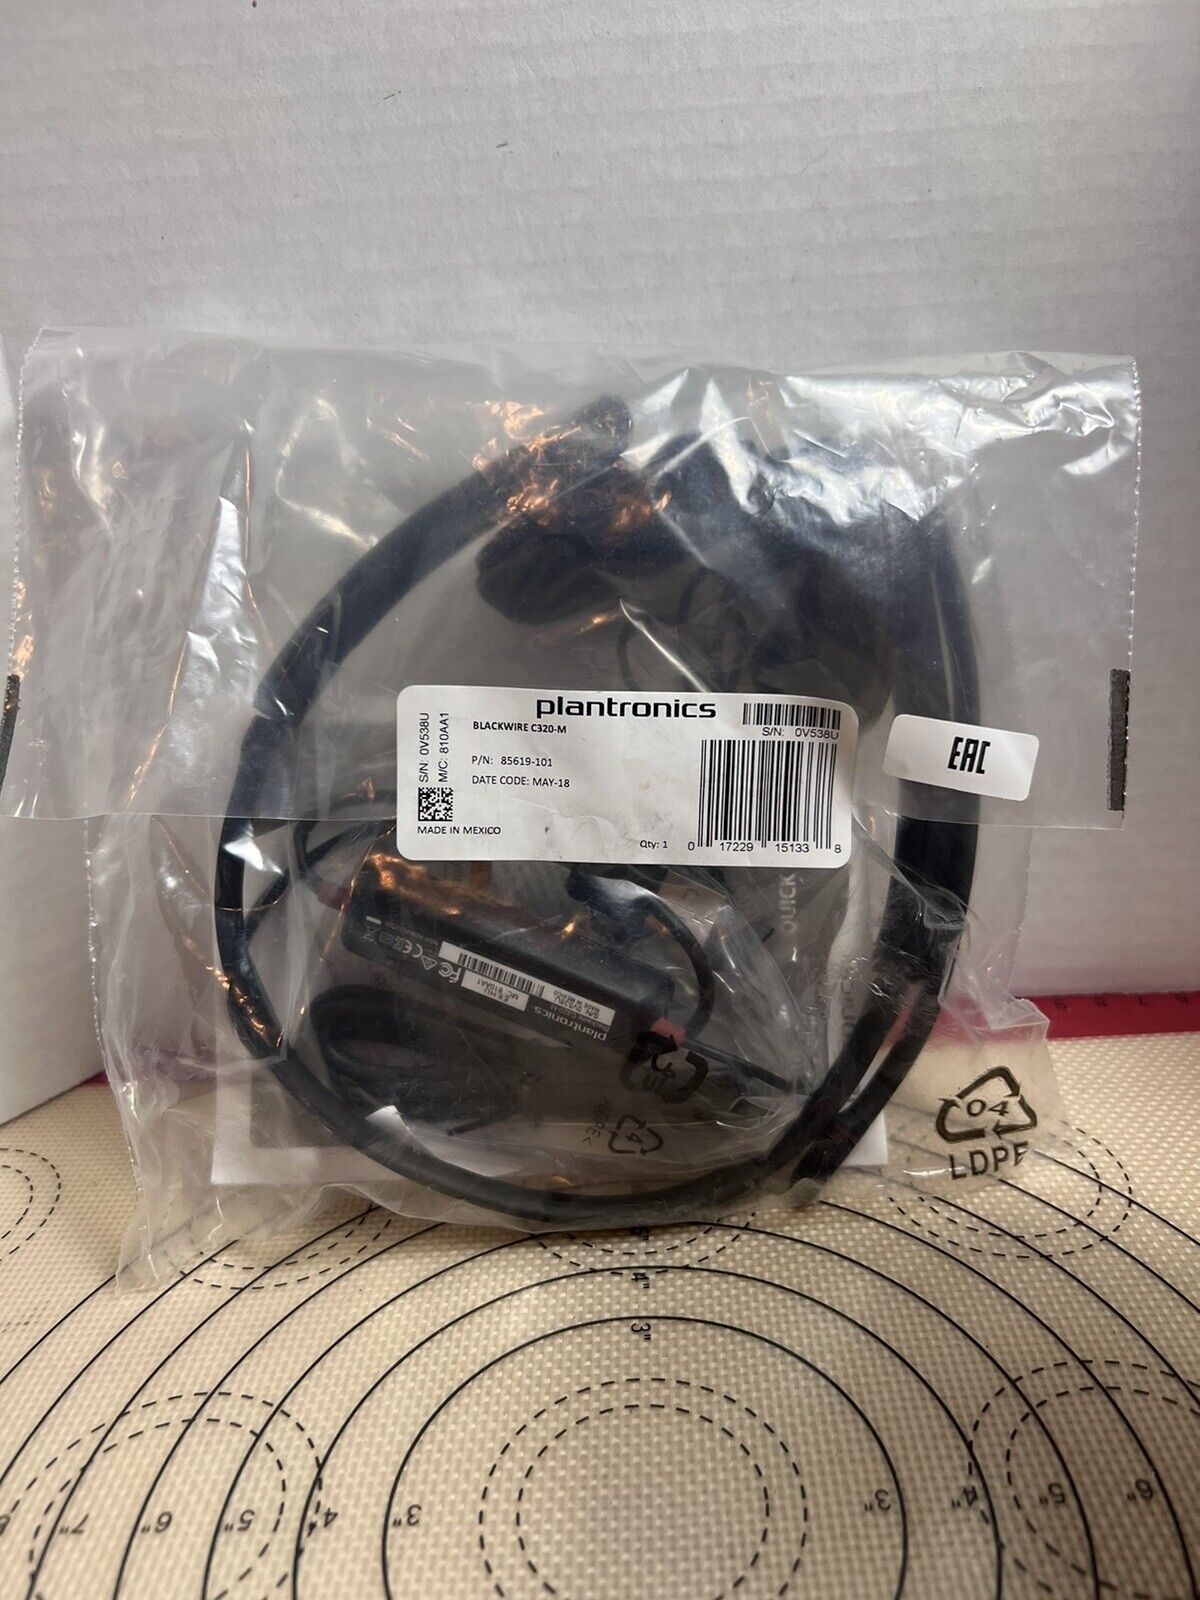 Plantronics Blackwire C320-M Stereo Headband Corded USB PC Headset for Microsoft